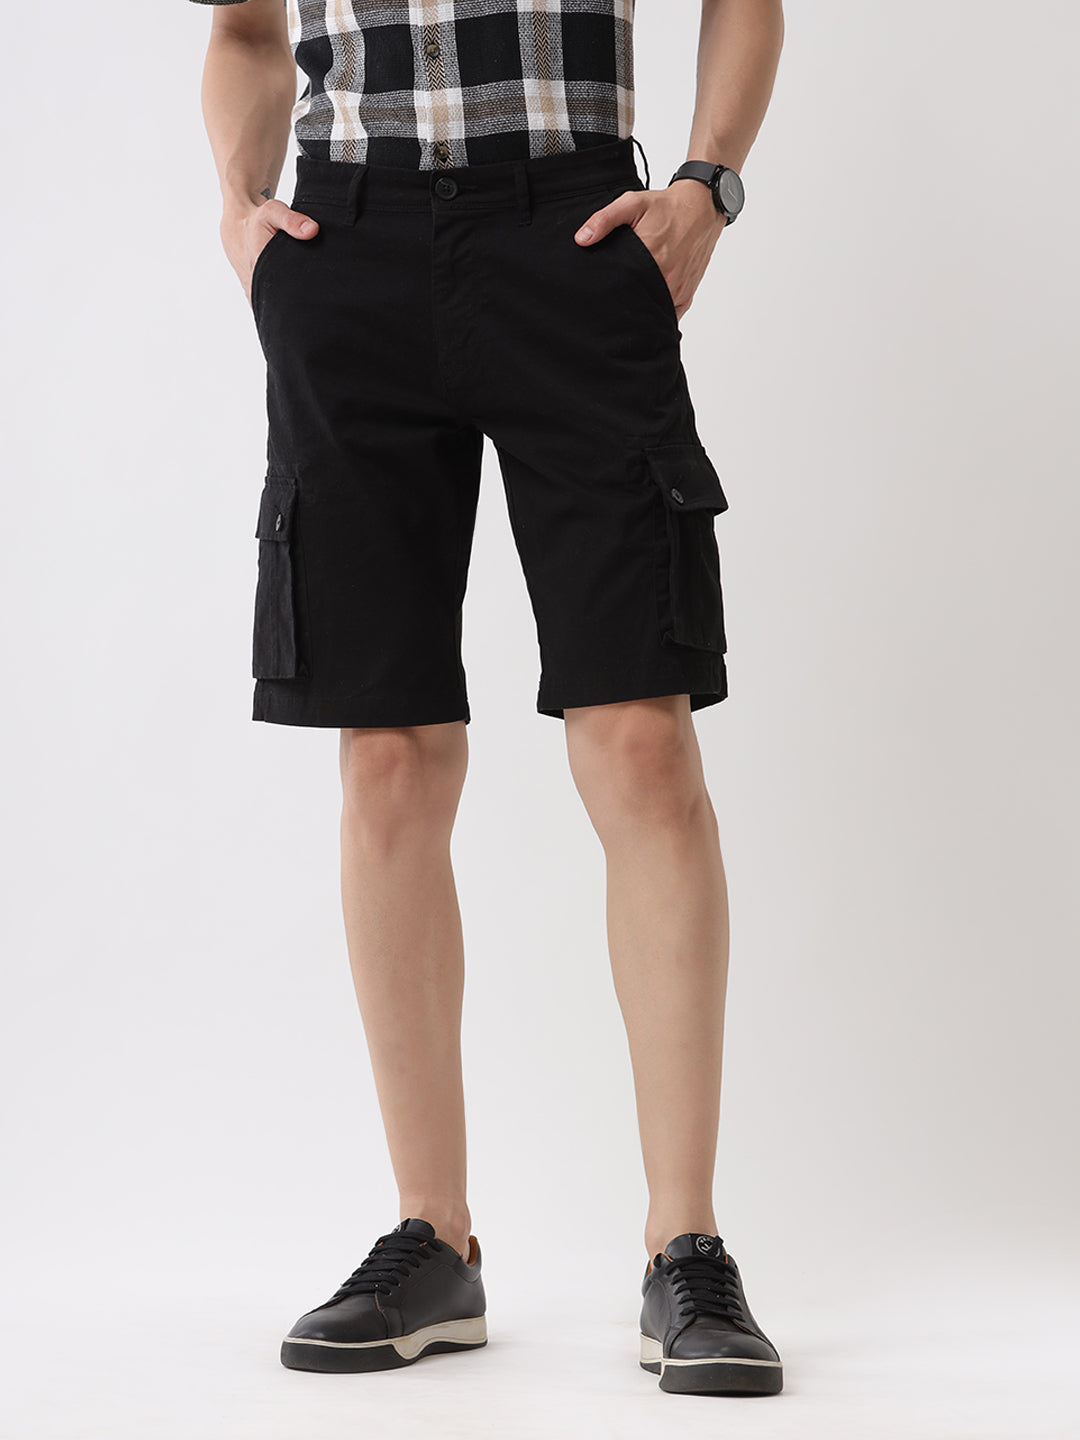 Solid Black Cargo Shorts